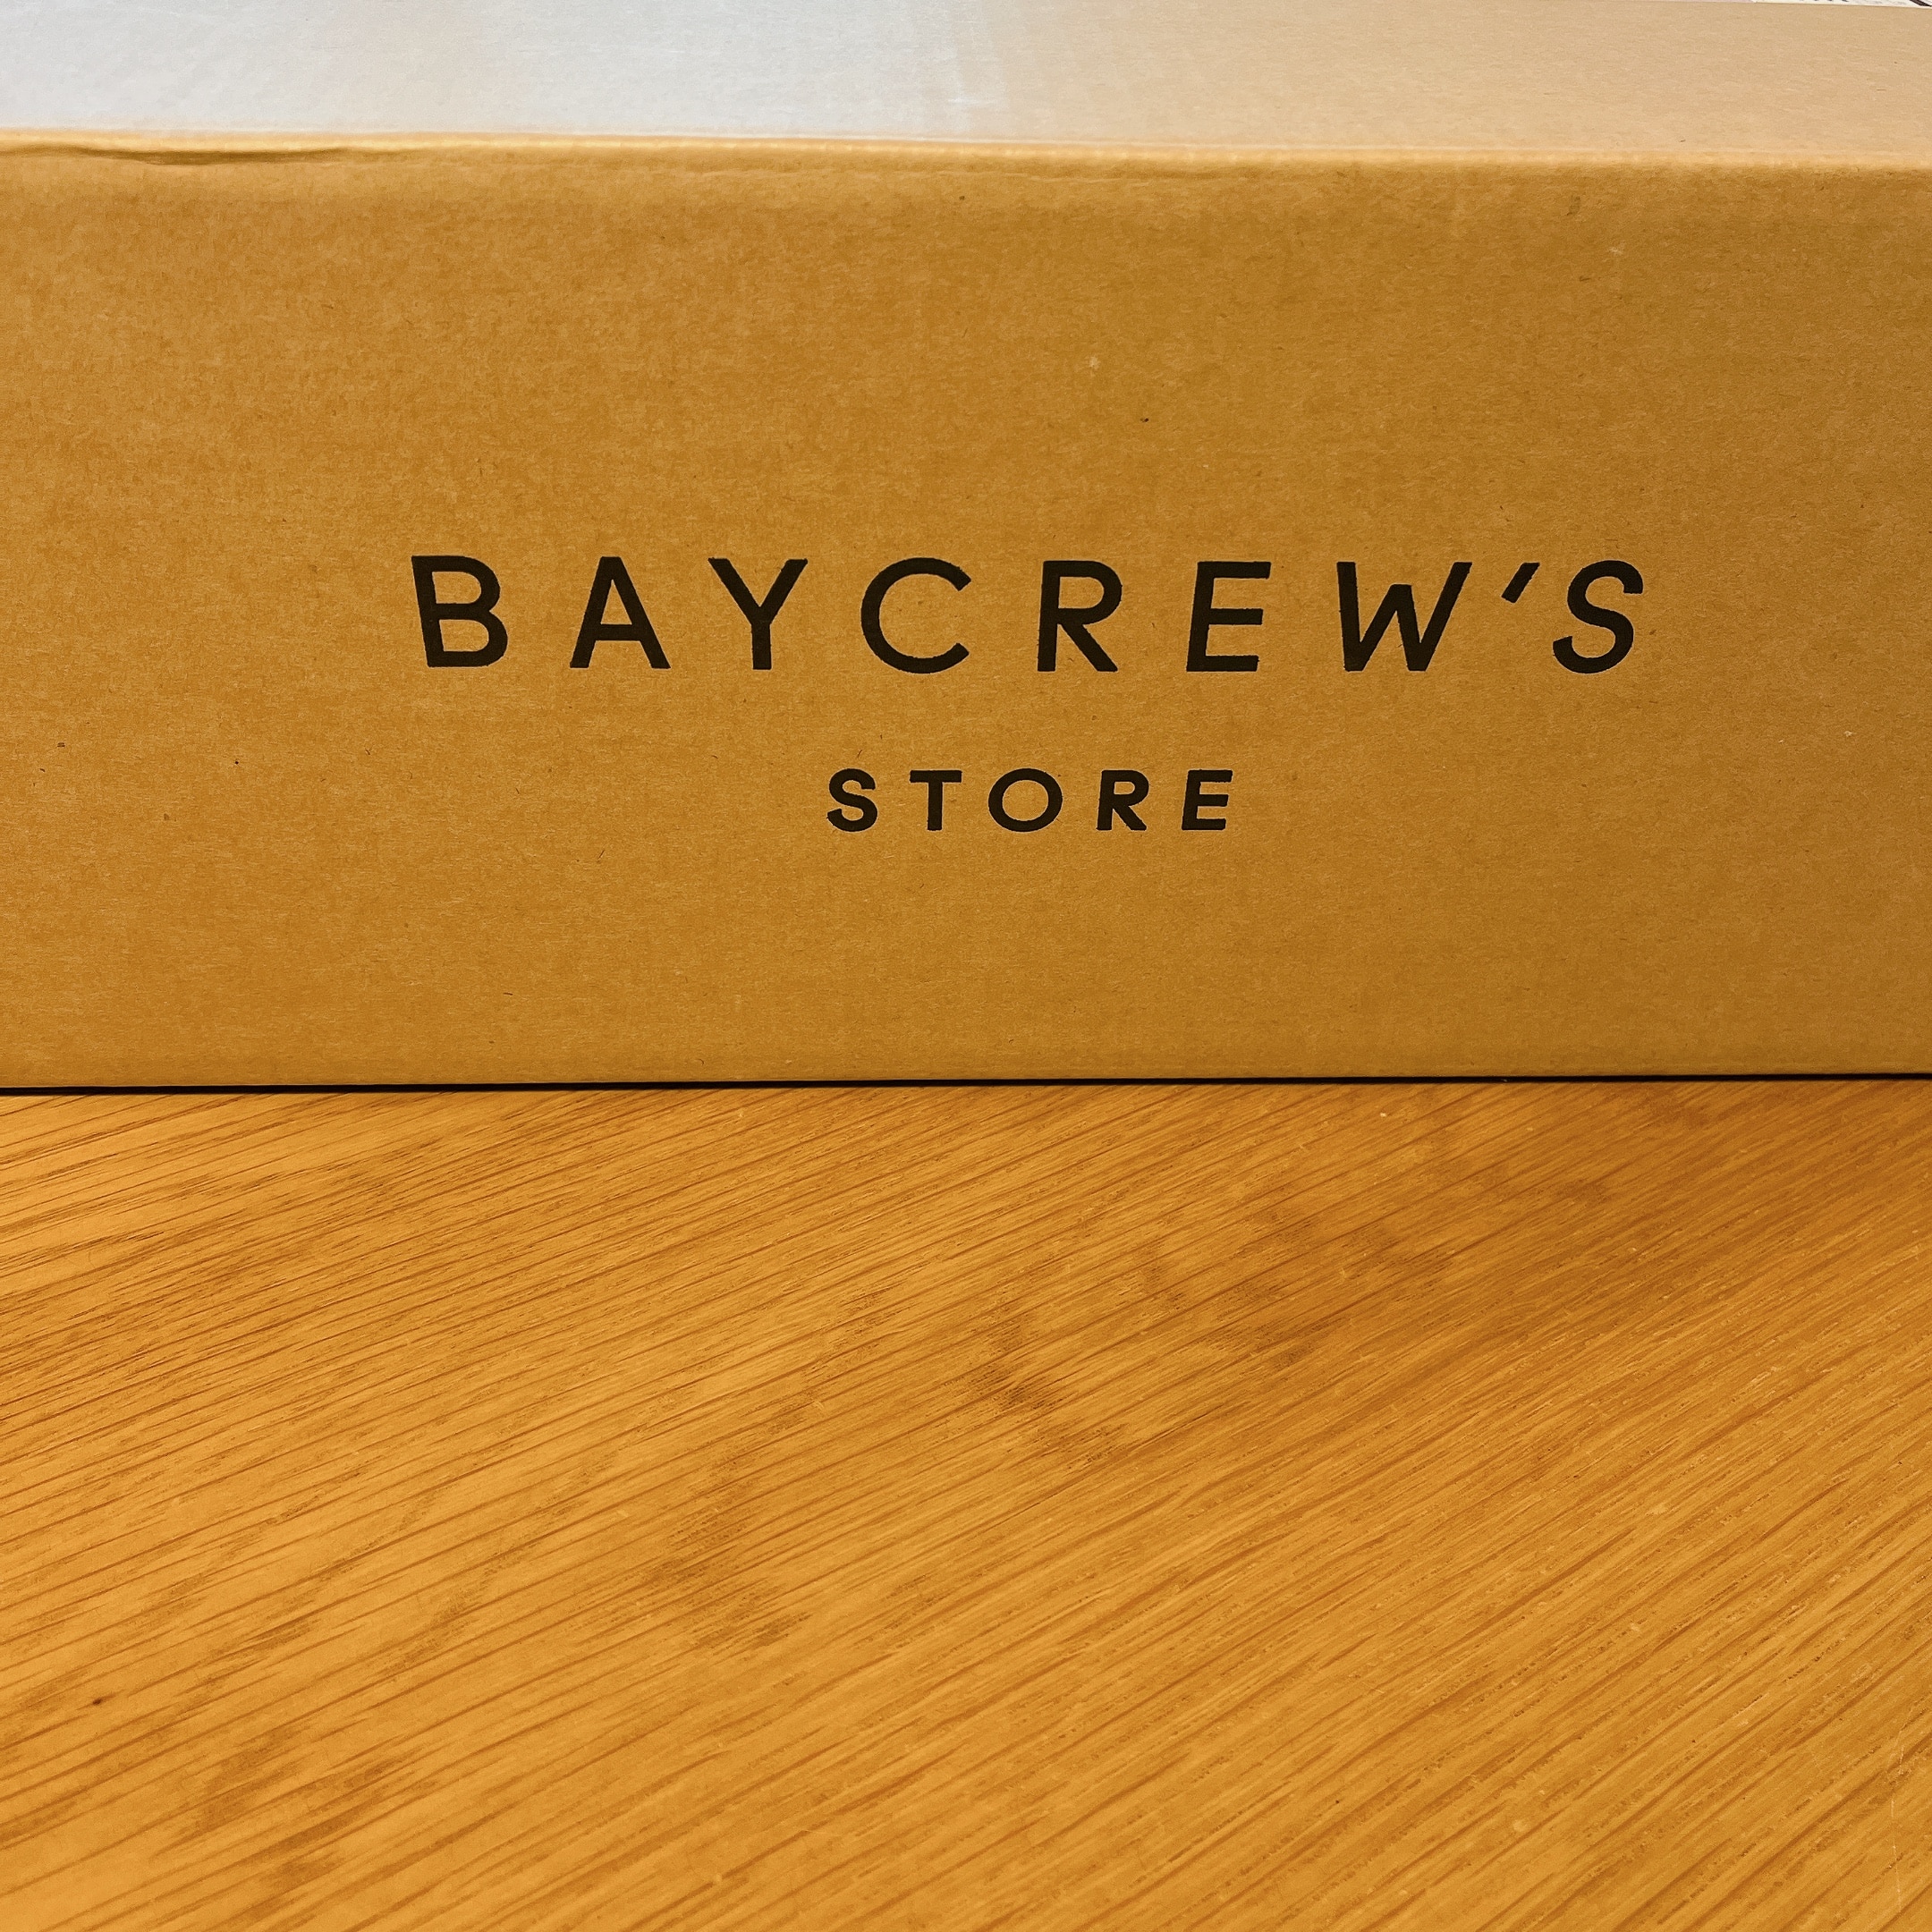 BAYCREW’S
